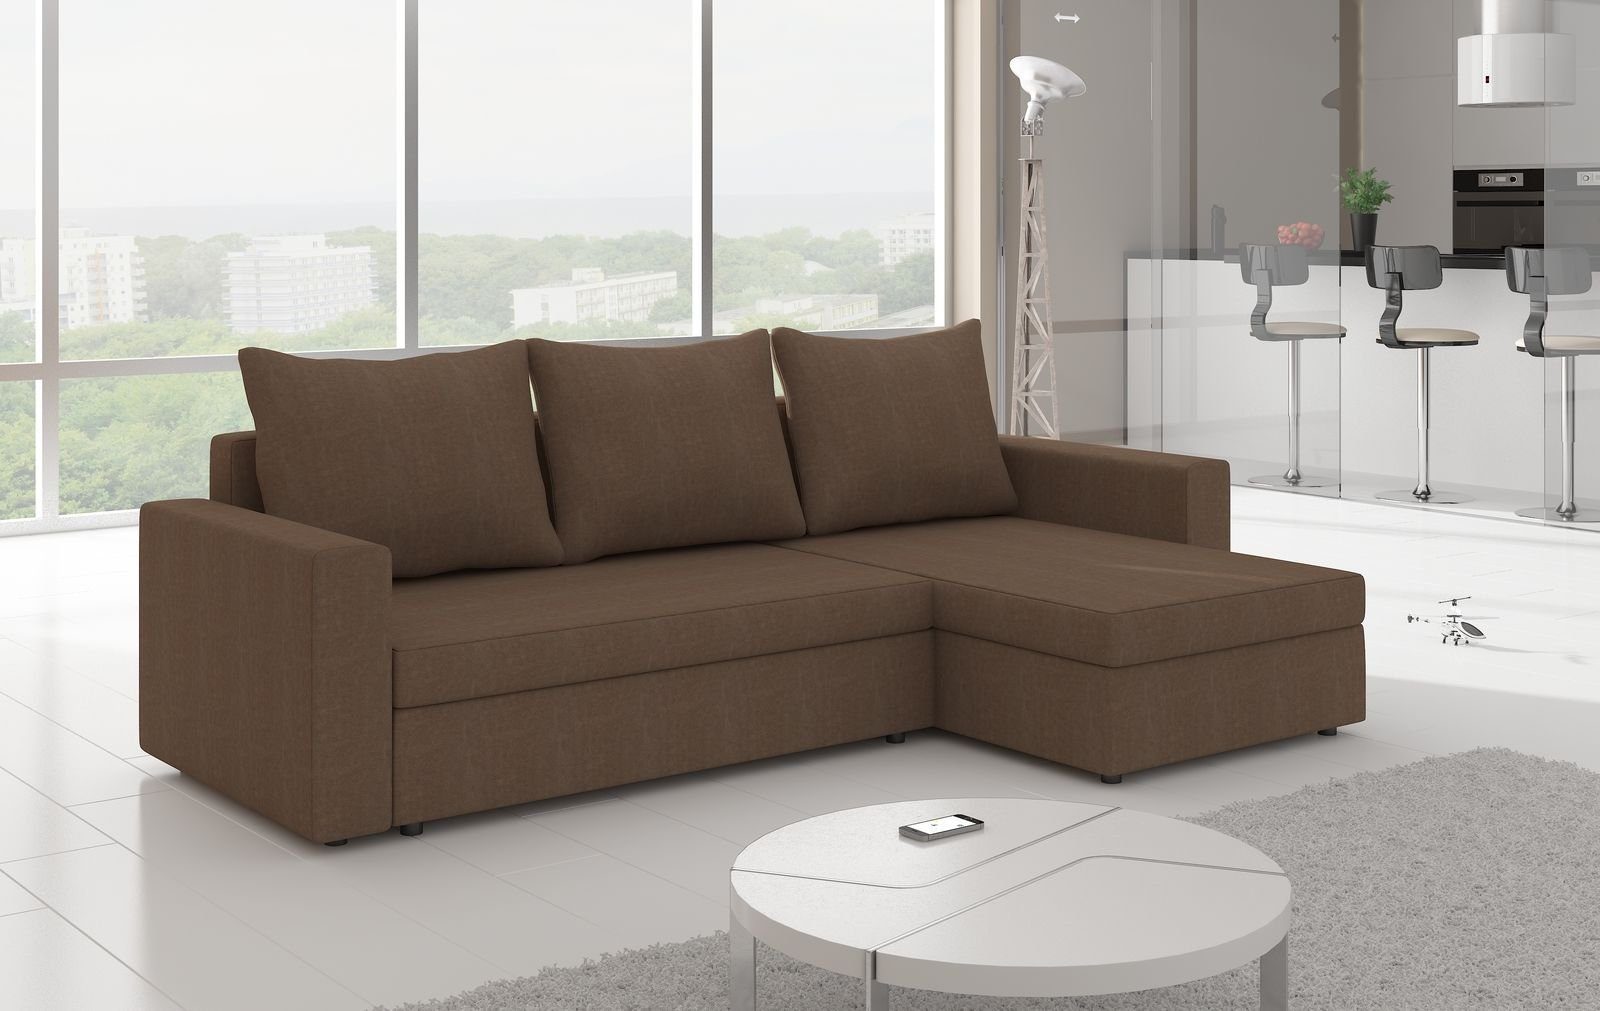 JVmoebel Ecksofa, Design Ecksofa Schlafsofa Bettfunktion Couch Leder Polster Braun